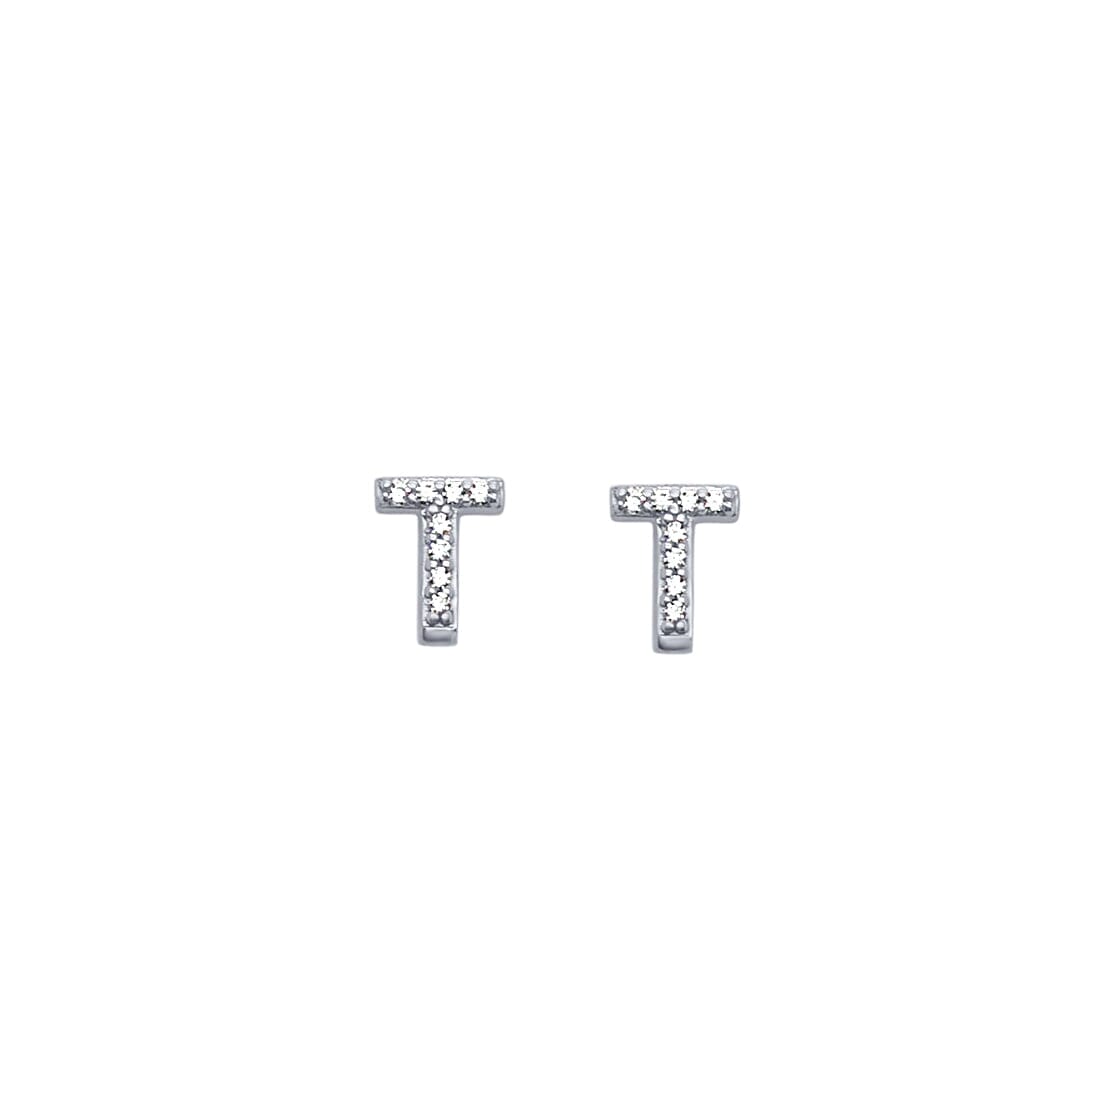 T Initial Stud Stud Earrings with Cubic Zirconia in Sterling Silver Earrings Bevilles 